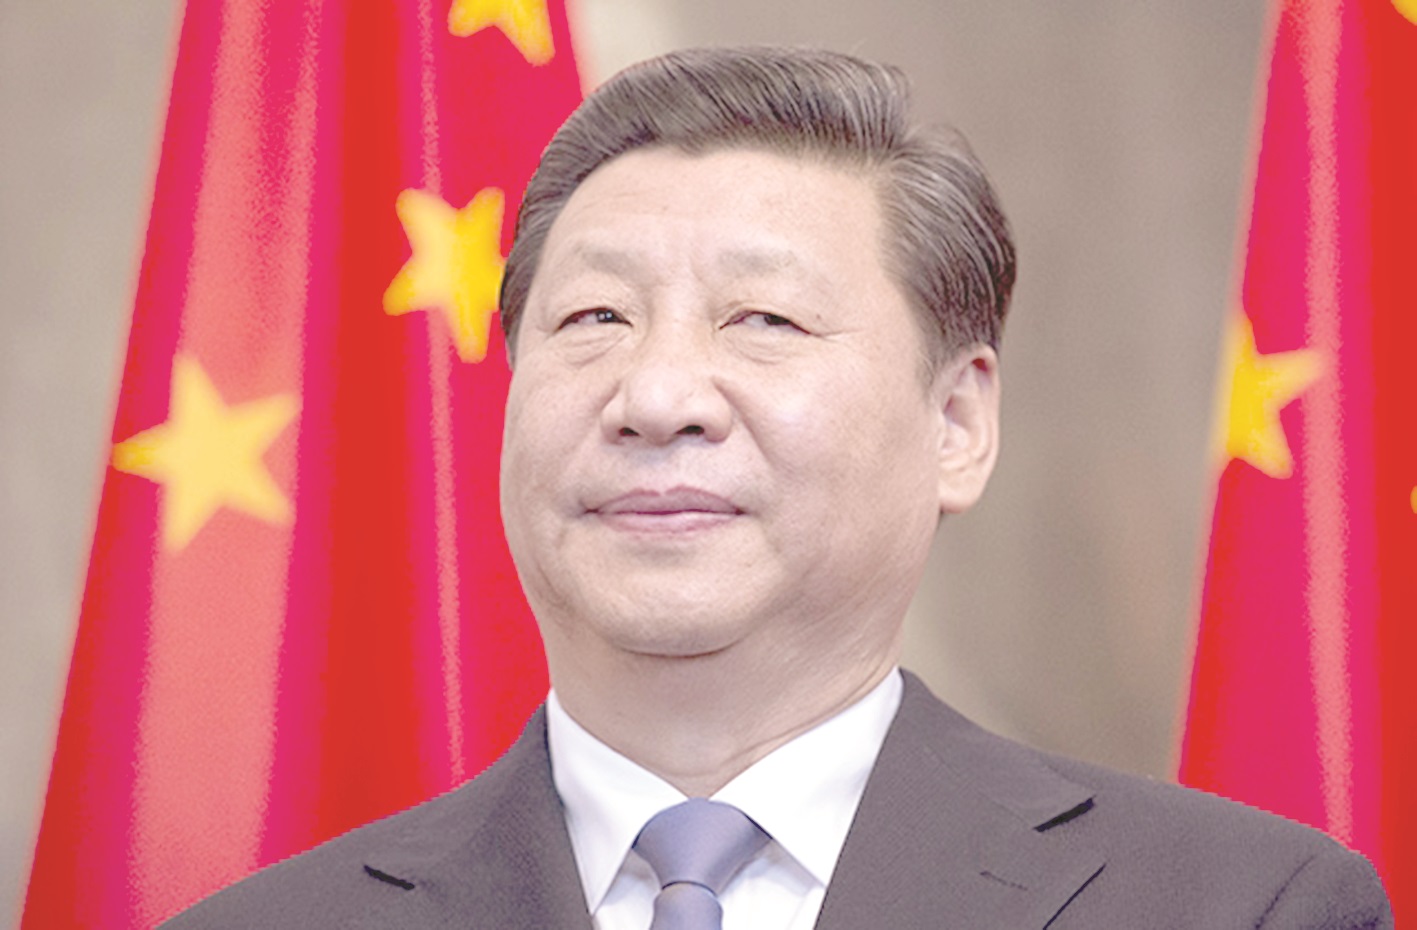 Xi warns of worsening situation with Taiwan